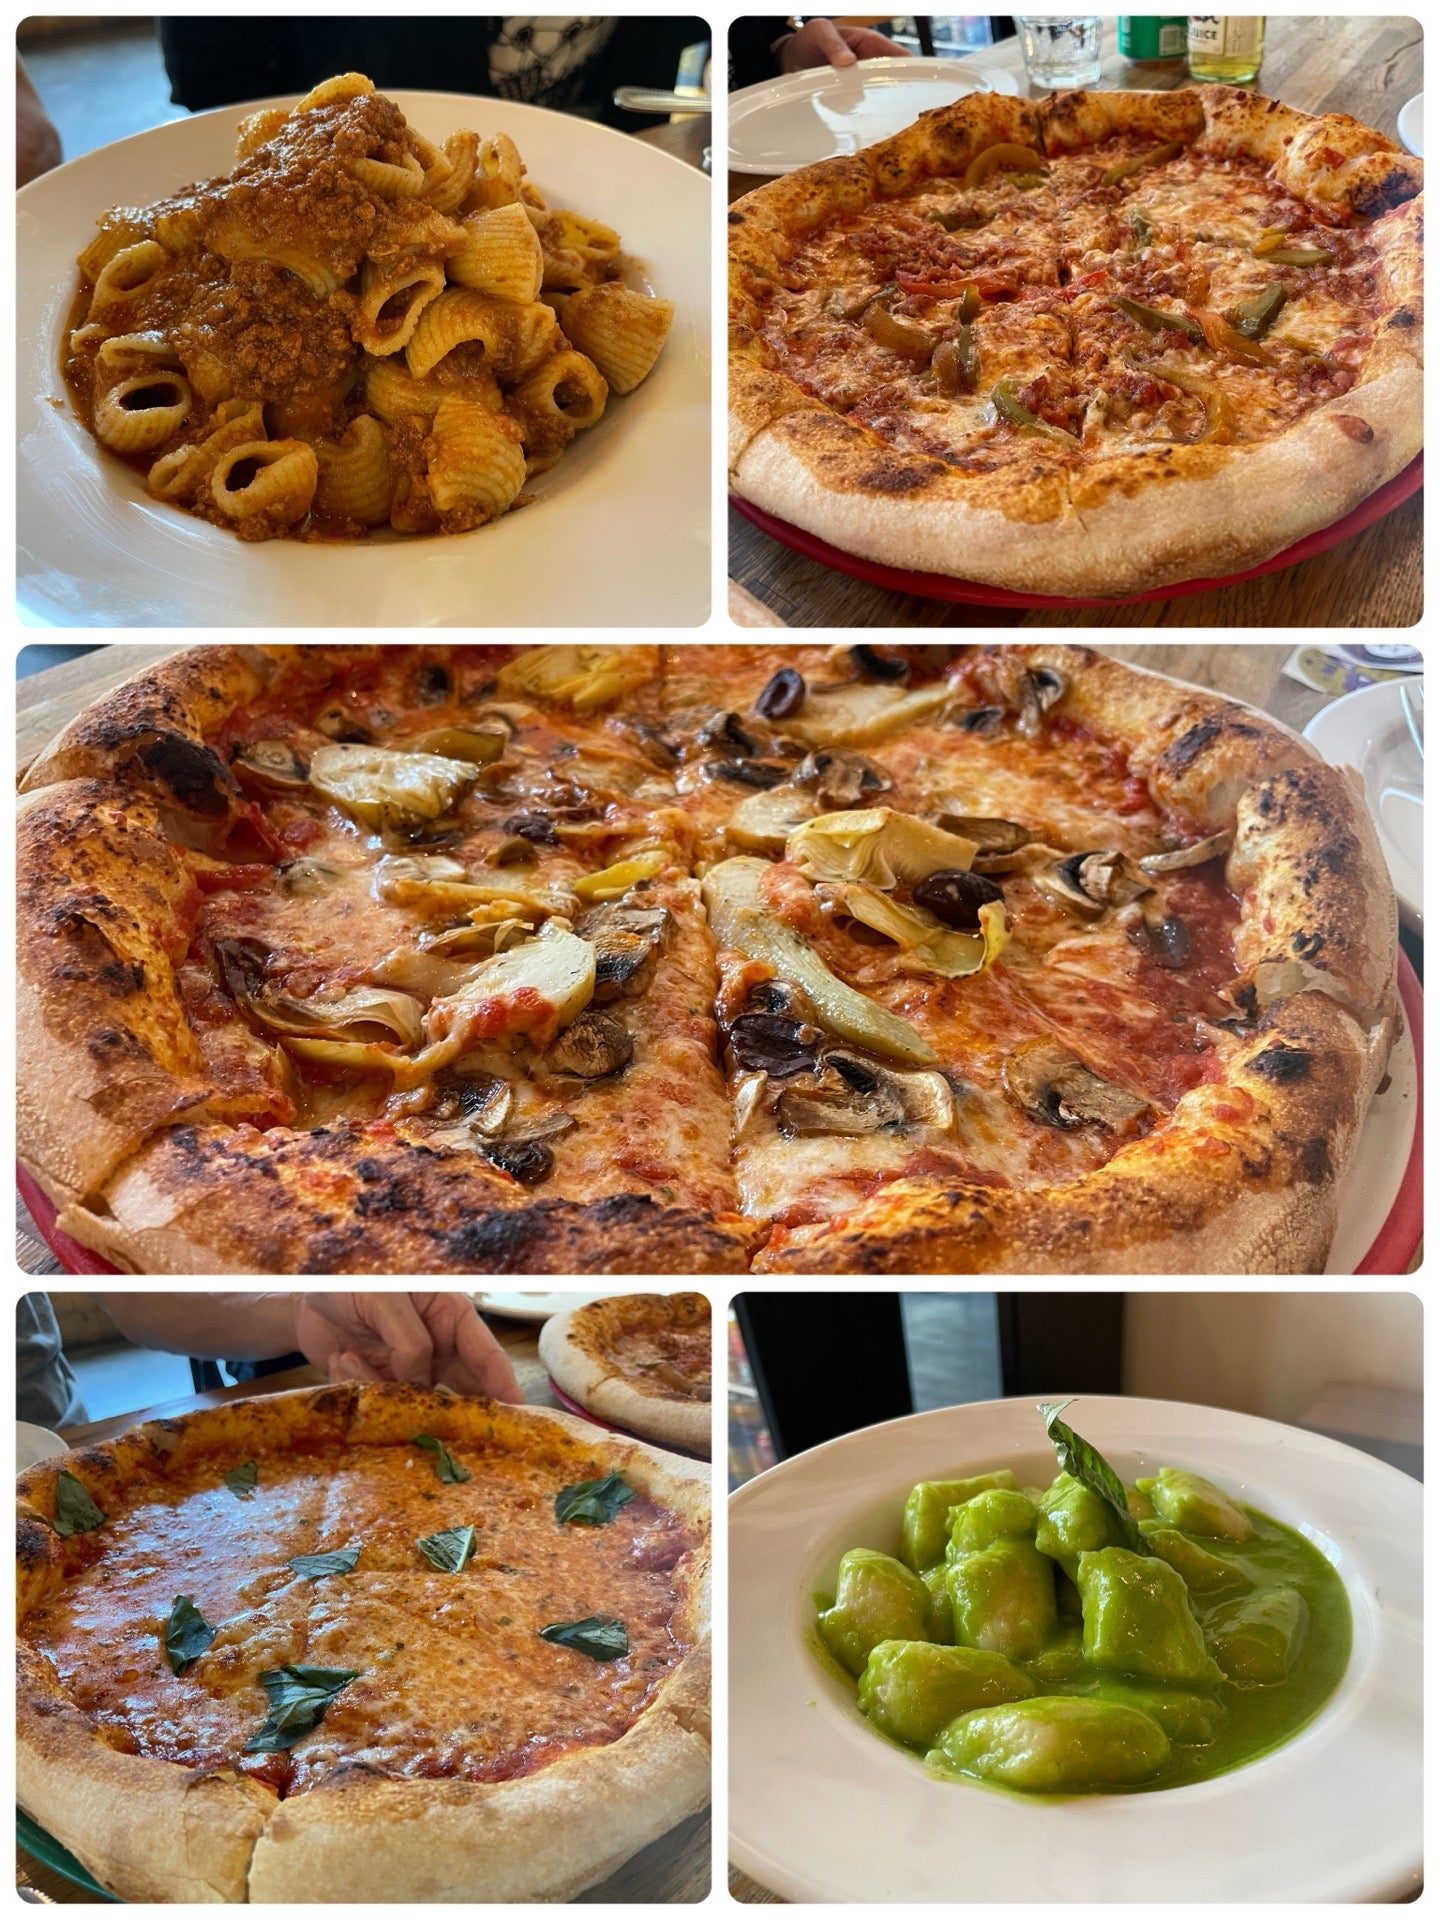 Gastromaniac Homemade Pasta & Pizza